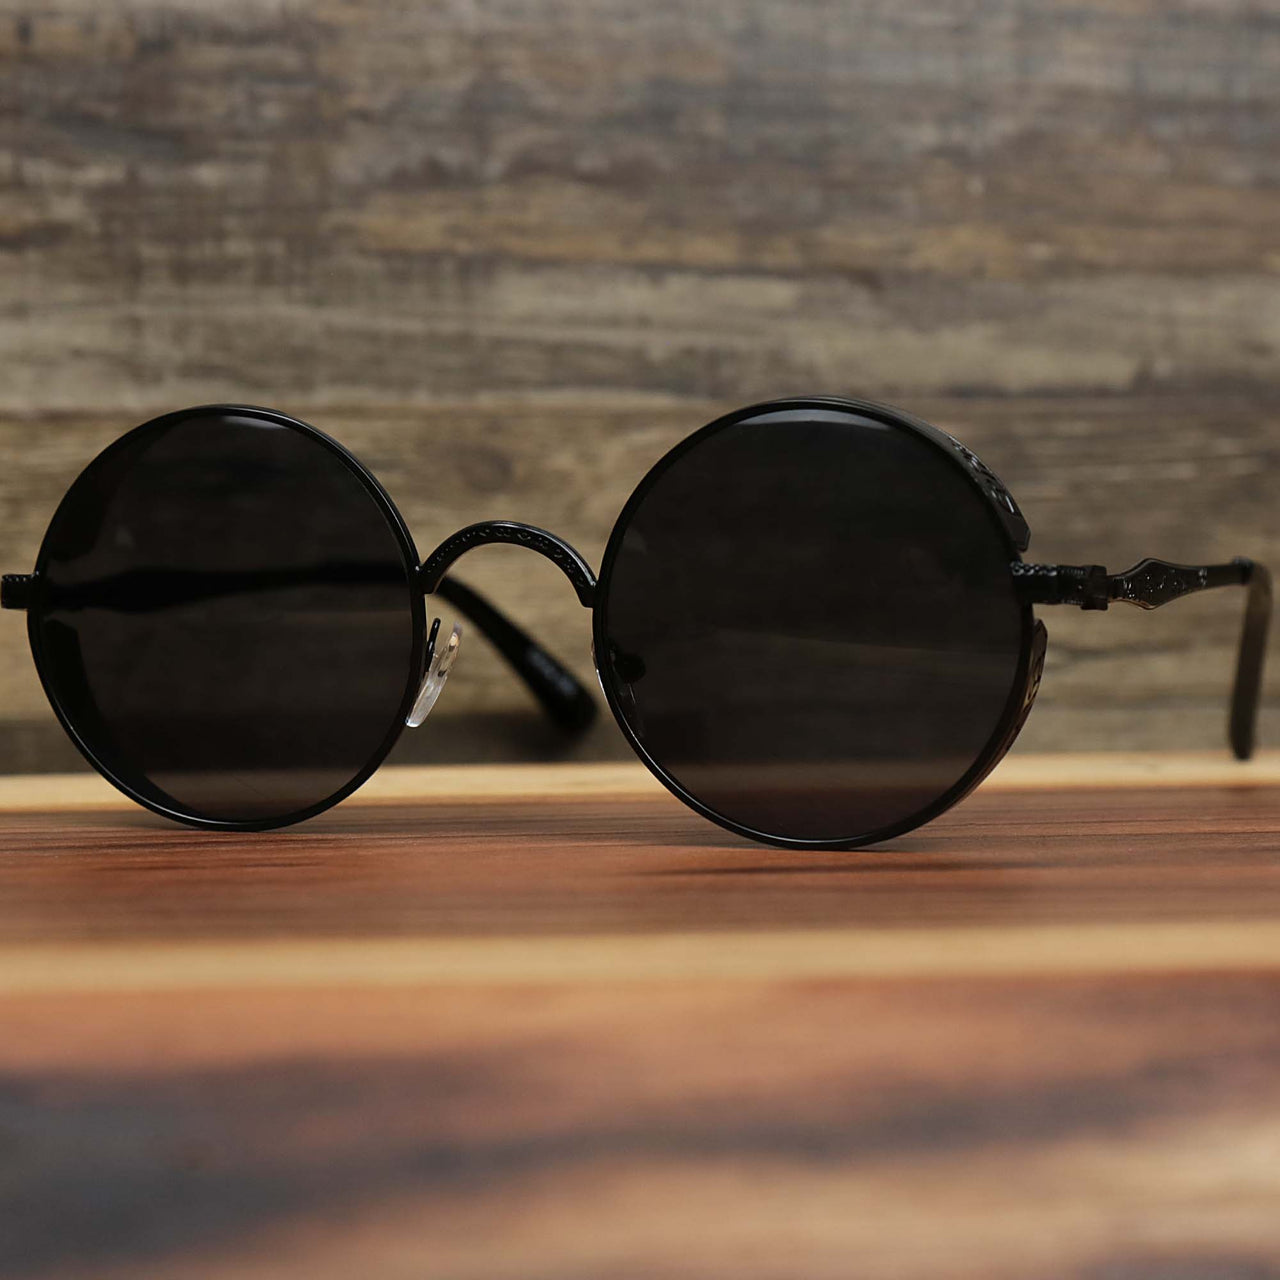 The Round Frame Arched Bridge Black Lens Sunglasses with Black Frame